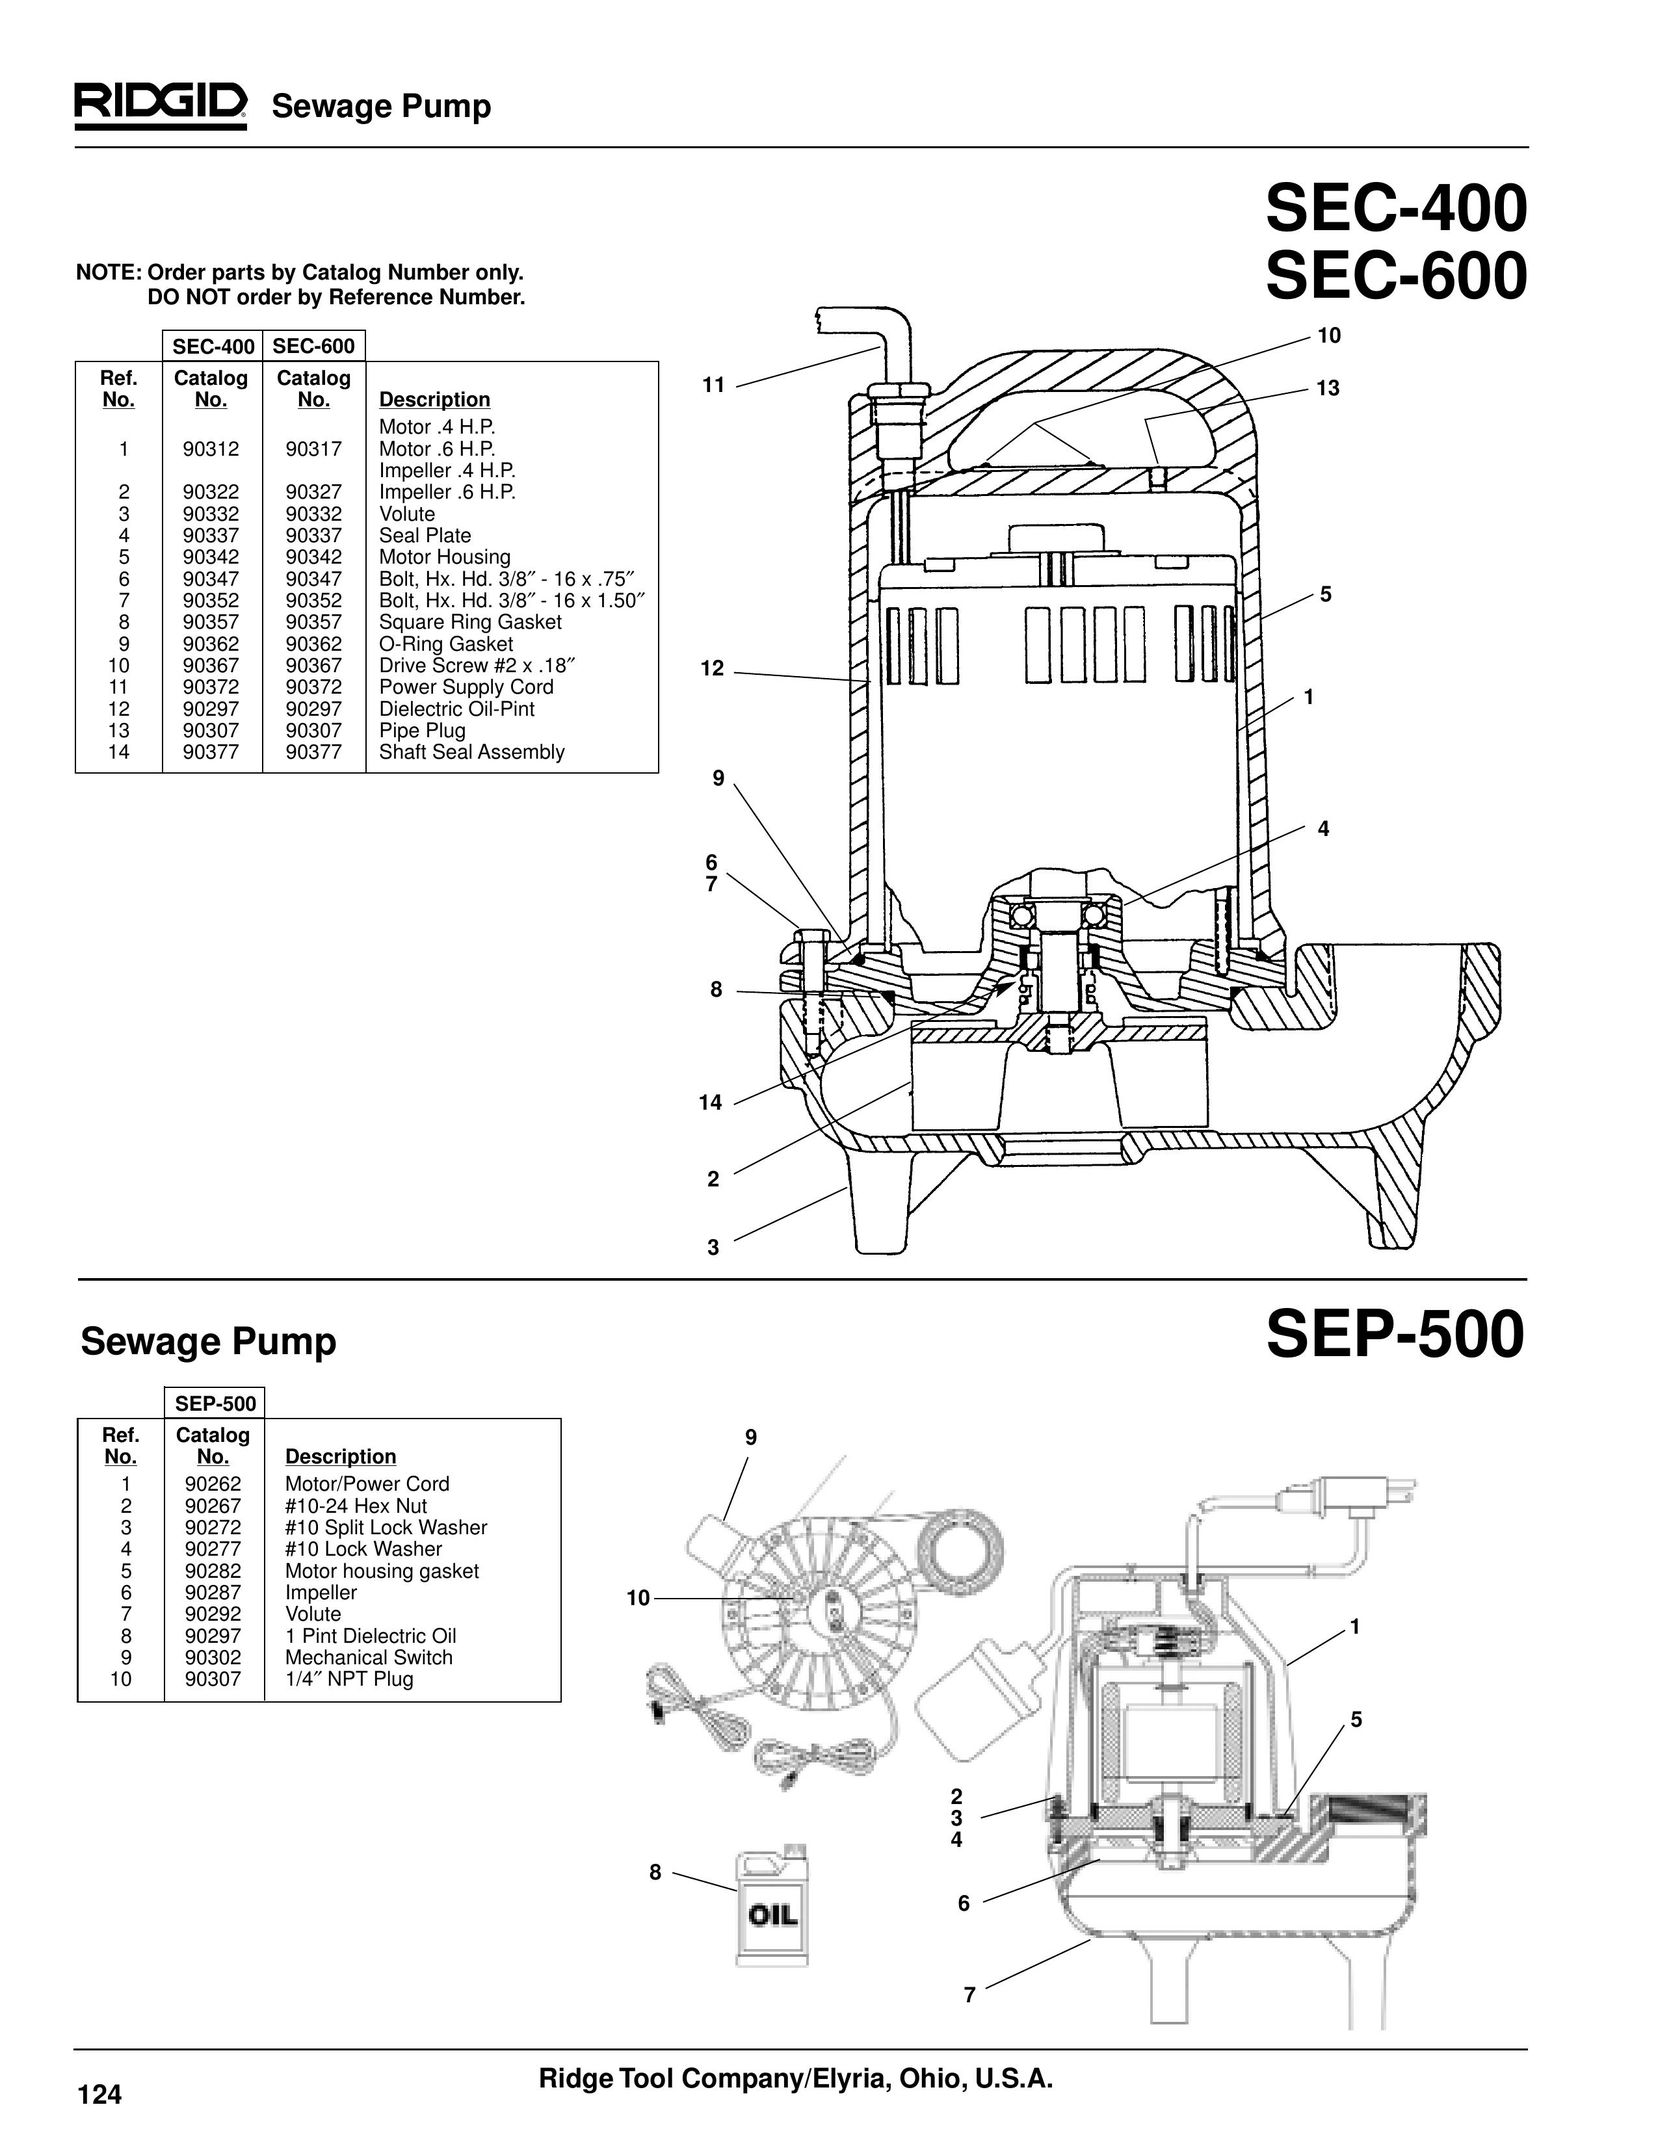 RIDGID SEC-400 Plumbing Product User Manual